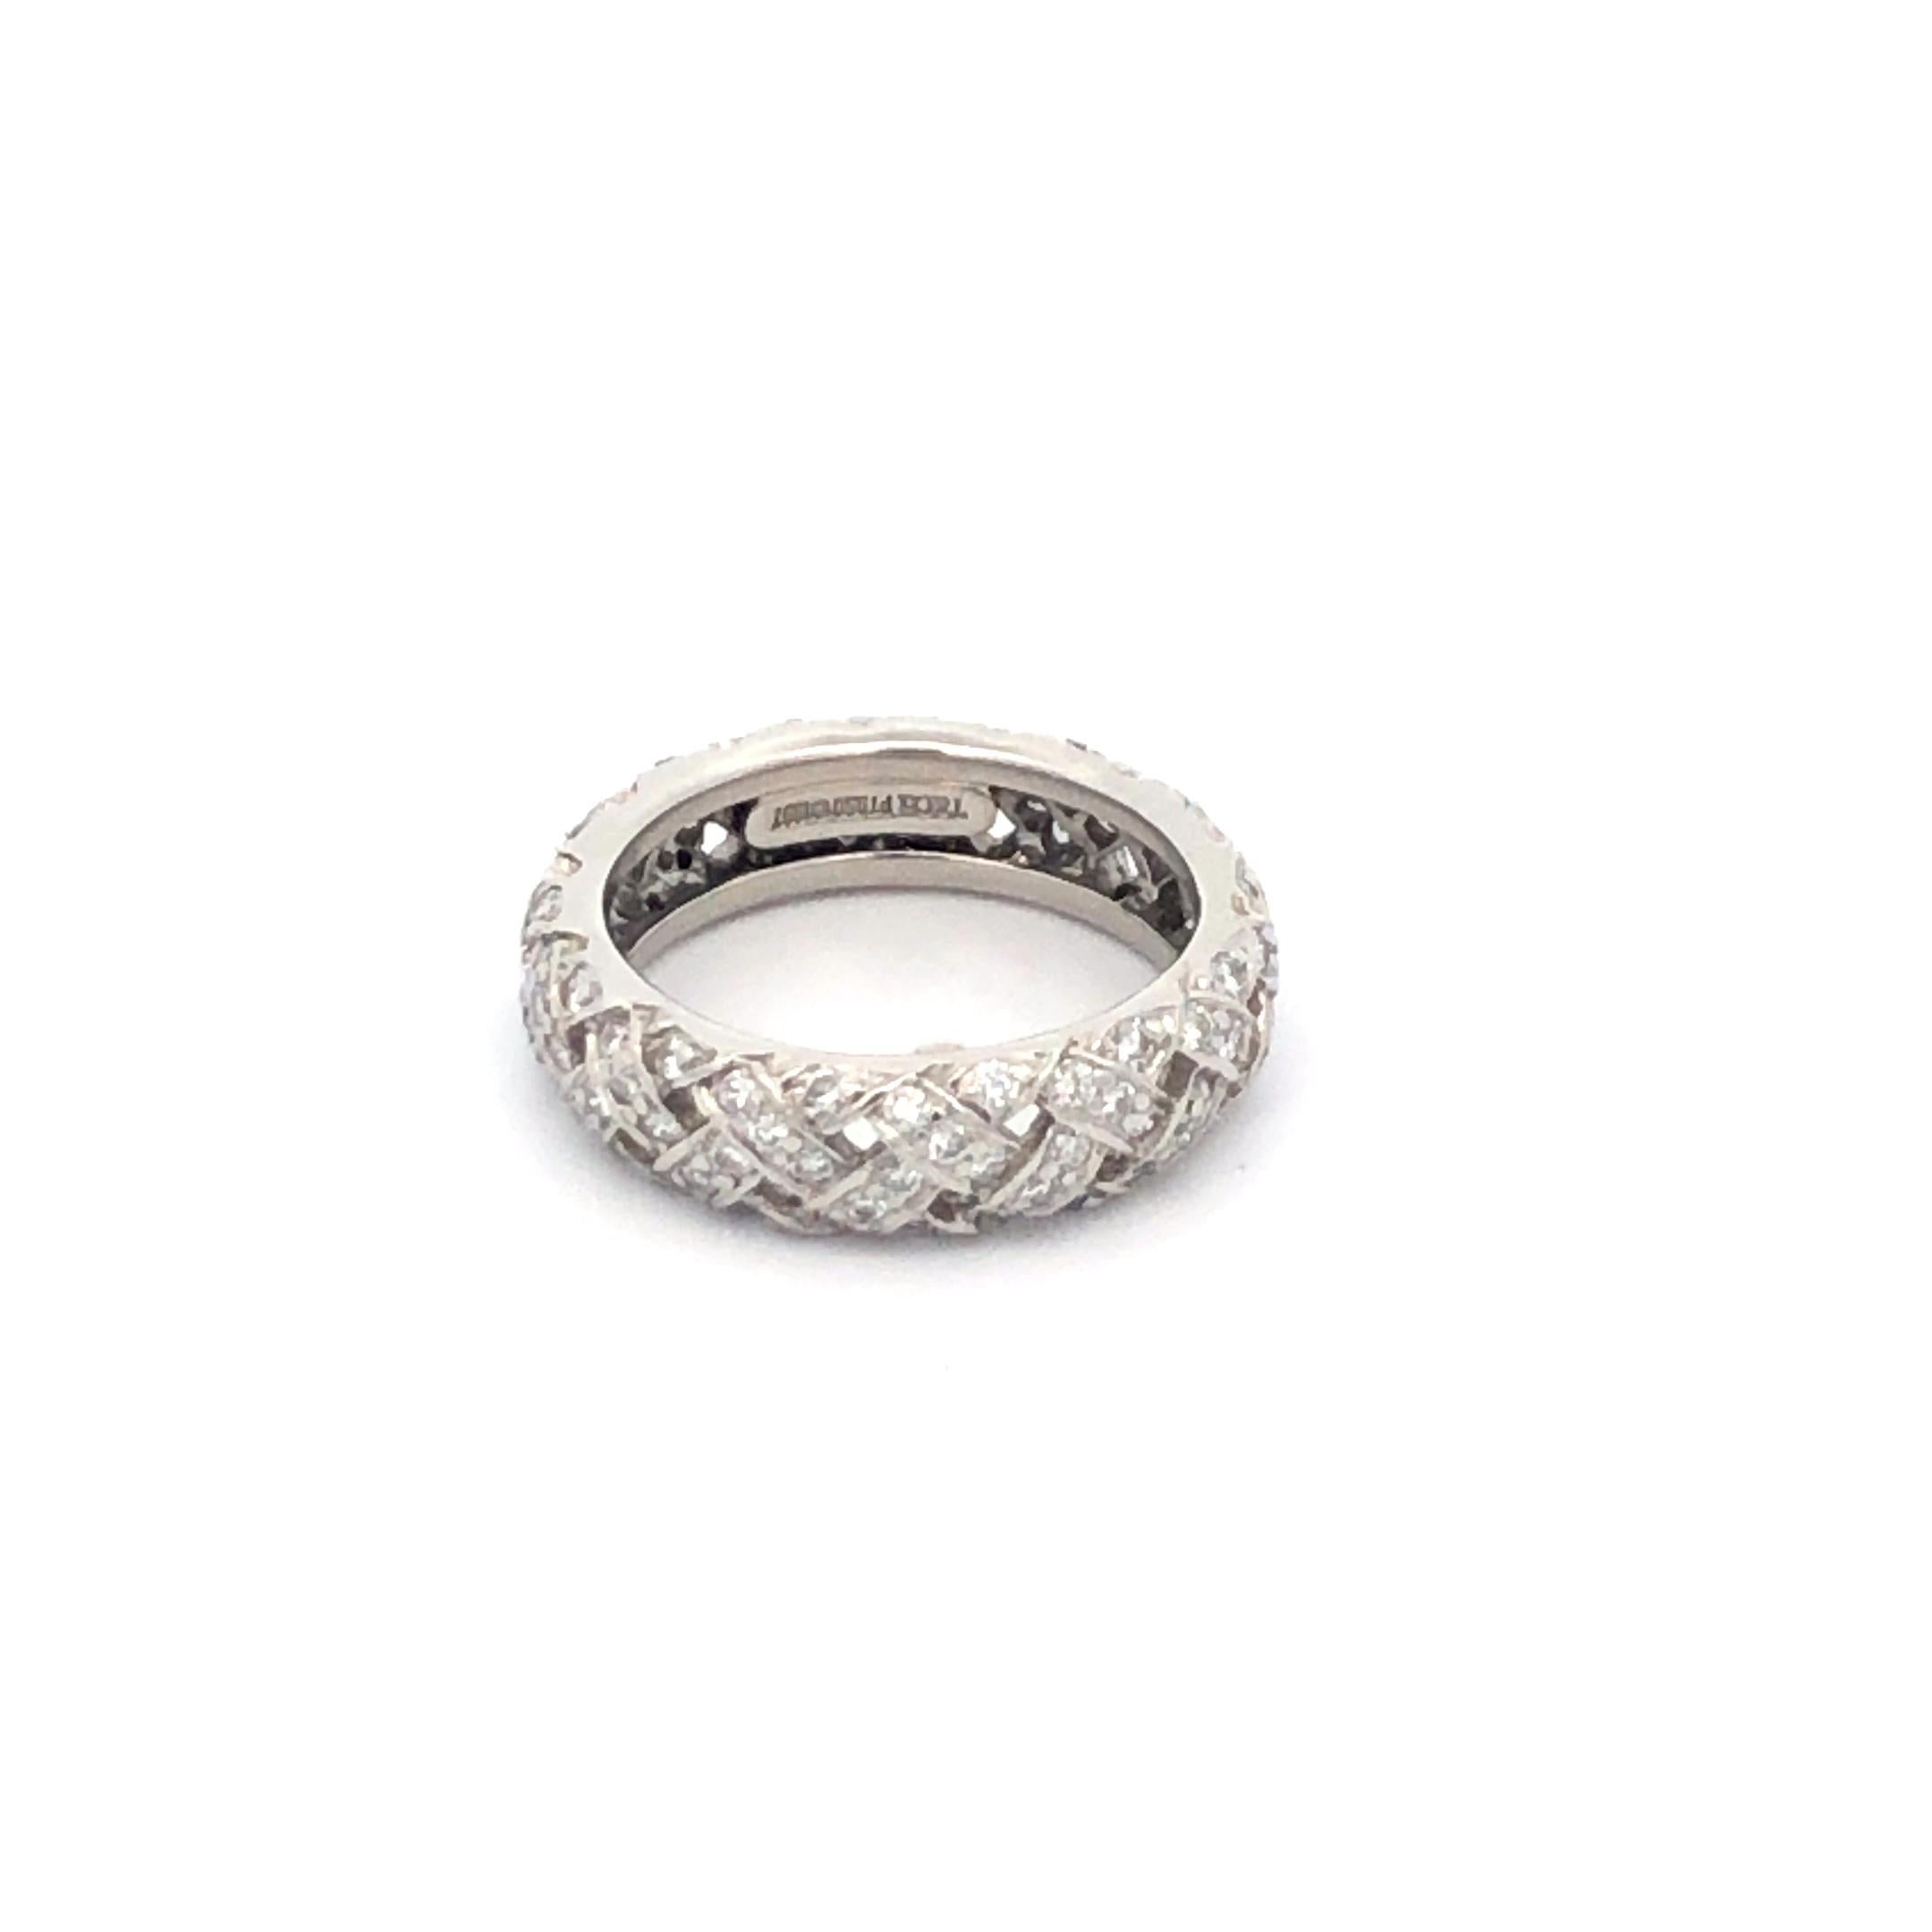 Tiffany & Co. Diamond Ring Platinum 1.50 ctw Diamond Ring Size 5 1/4 
5mm 6.6 Grams